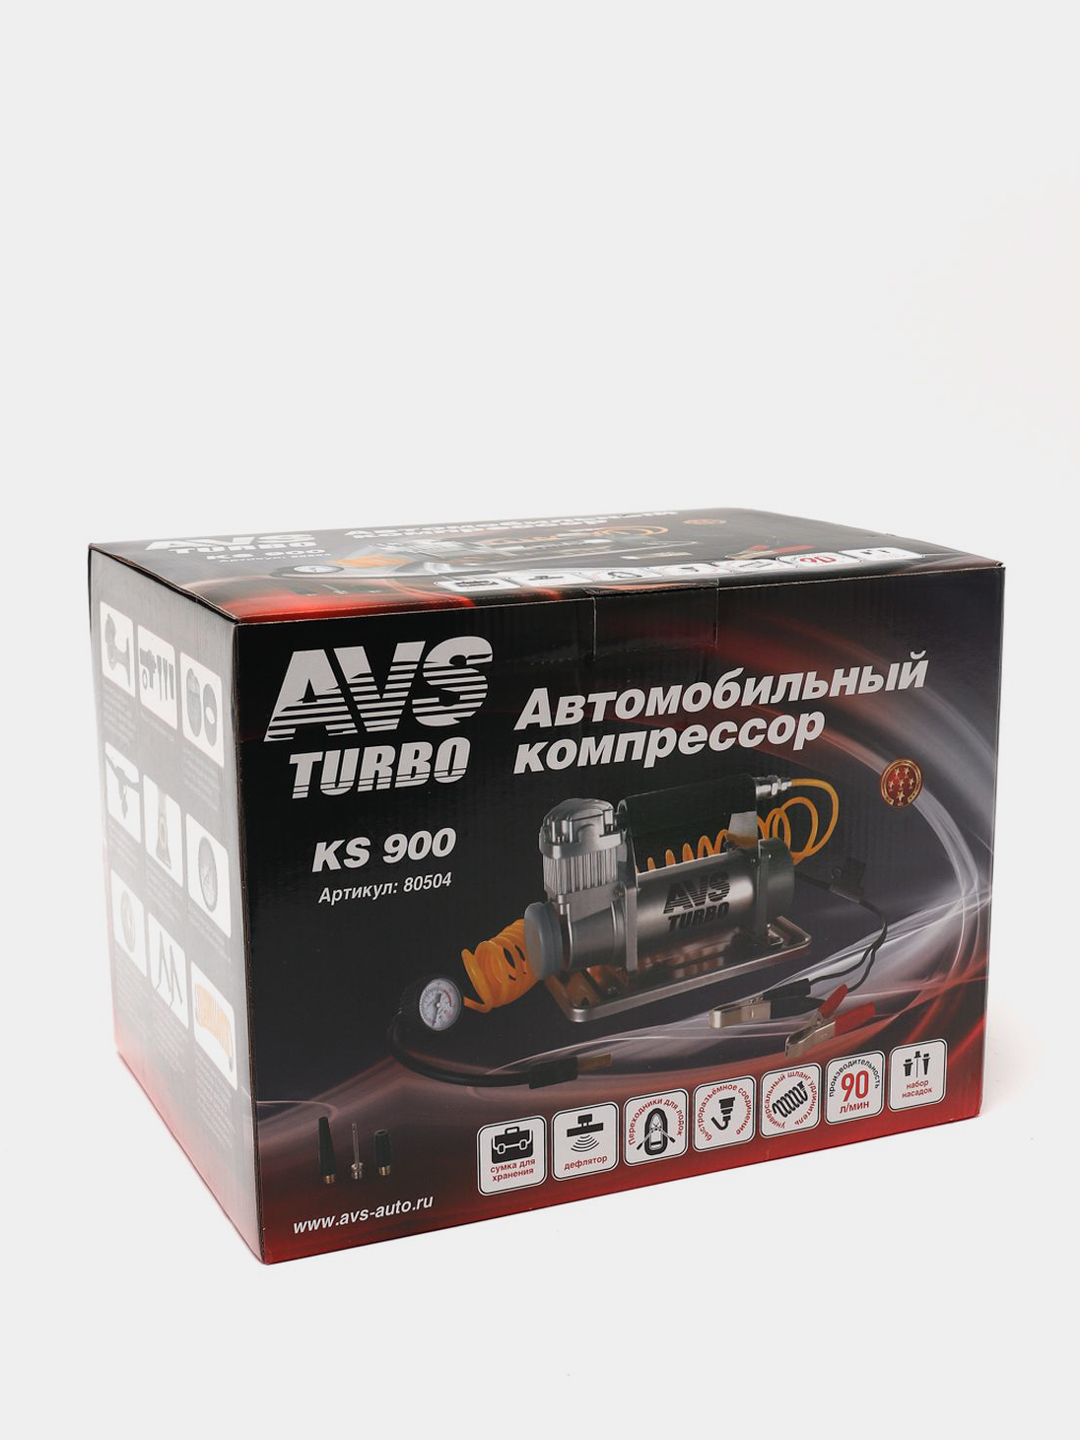 Компрессор автомобильный AVS KS900 автокомпрессор для подкачки шин .